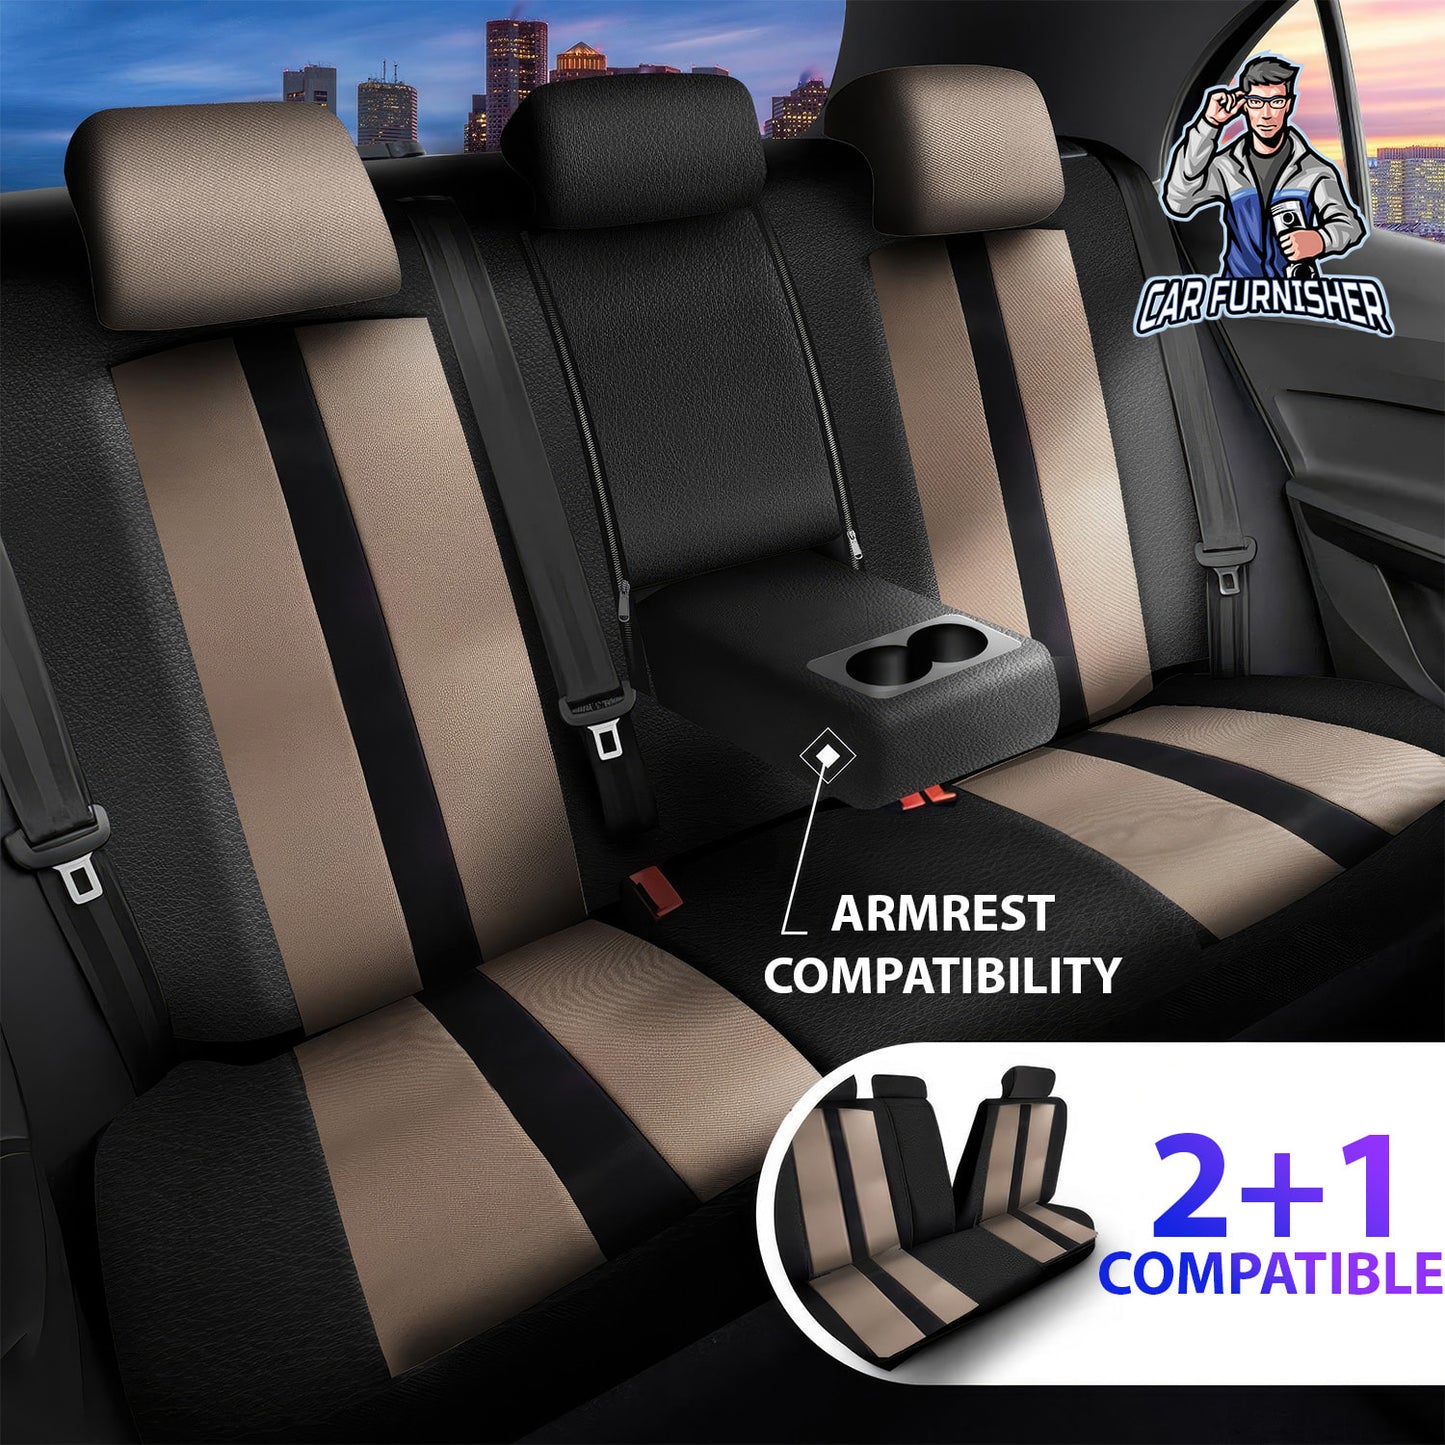 Car Seat Cover Set - Cappadocia Design Beige 5 Seats + Headrests (Full Set) Leather & Jacquard Fabric